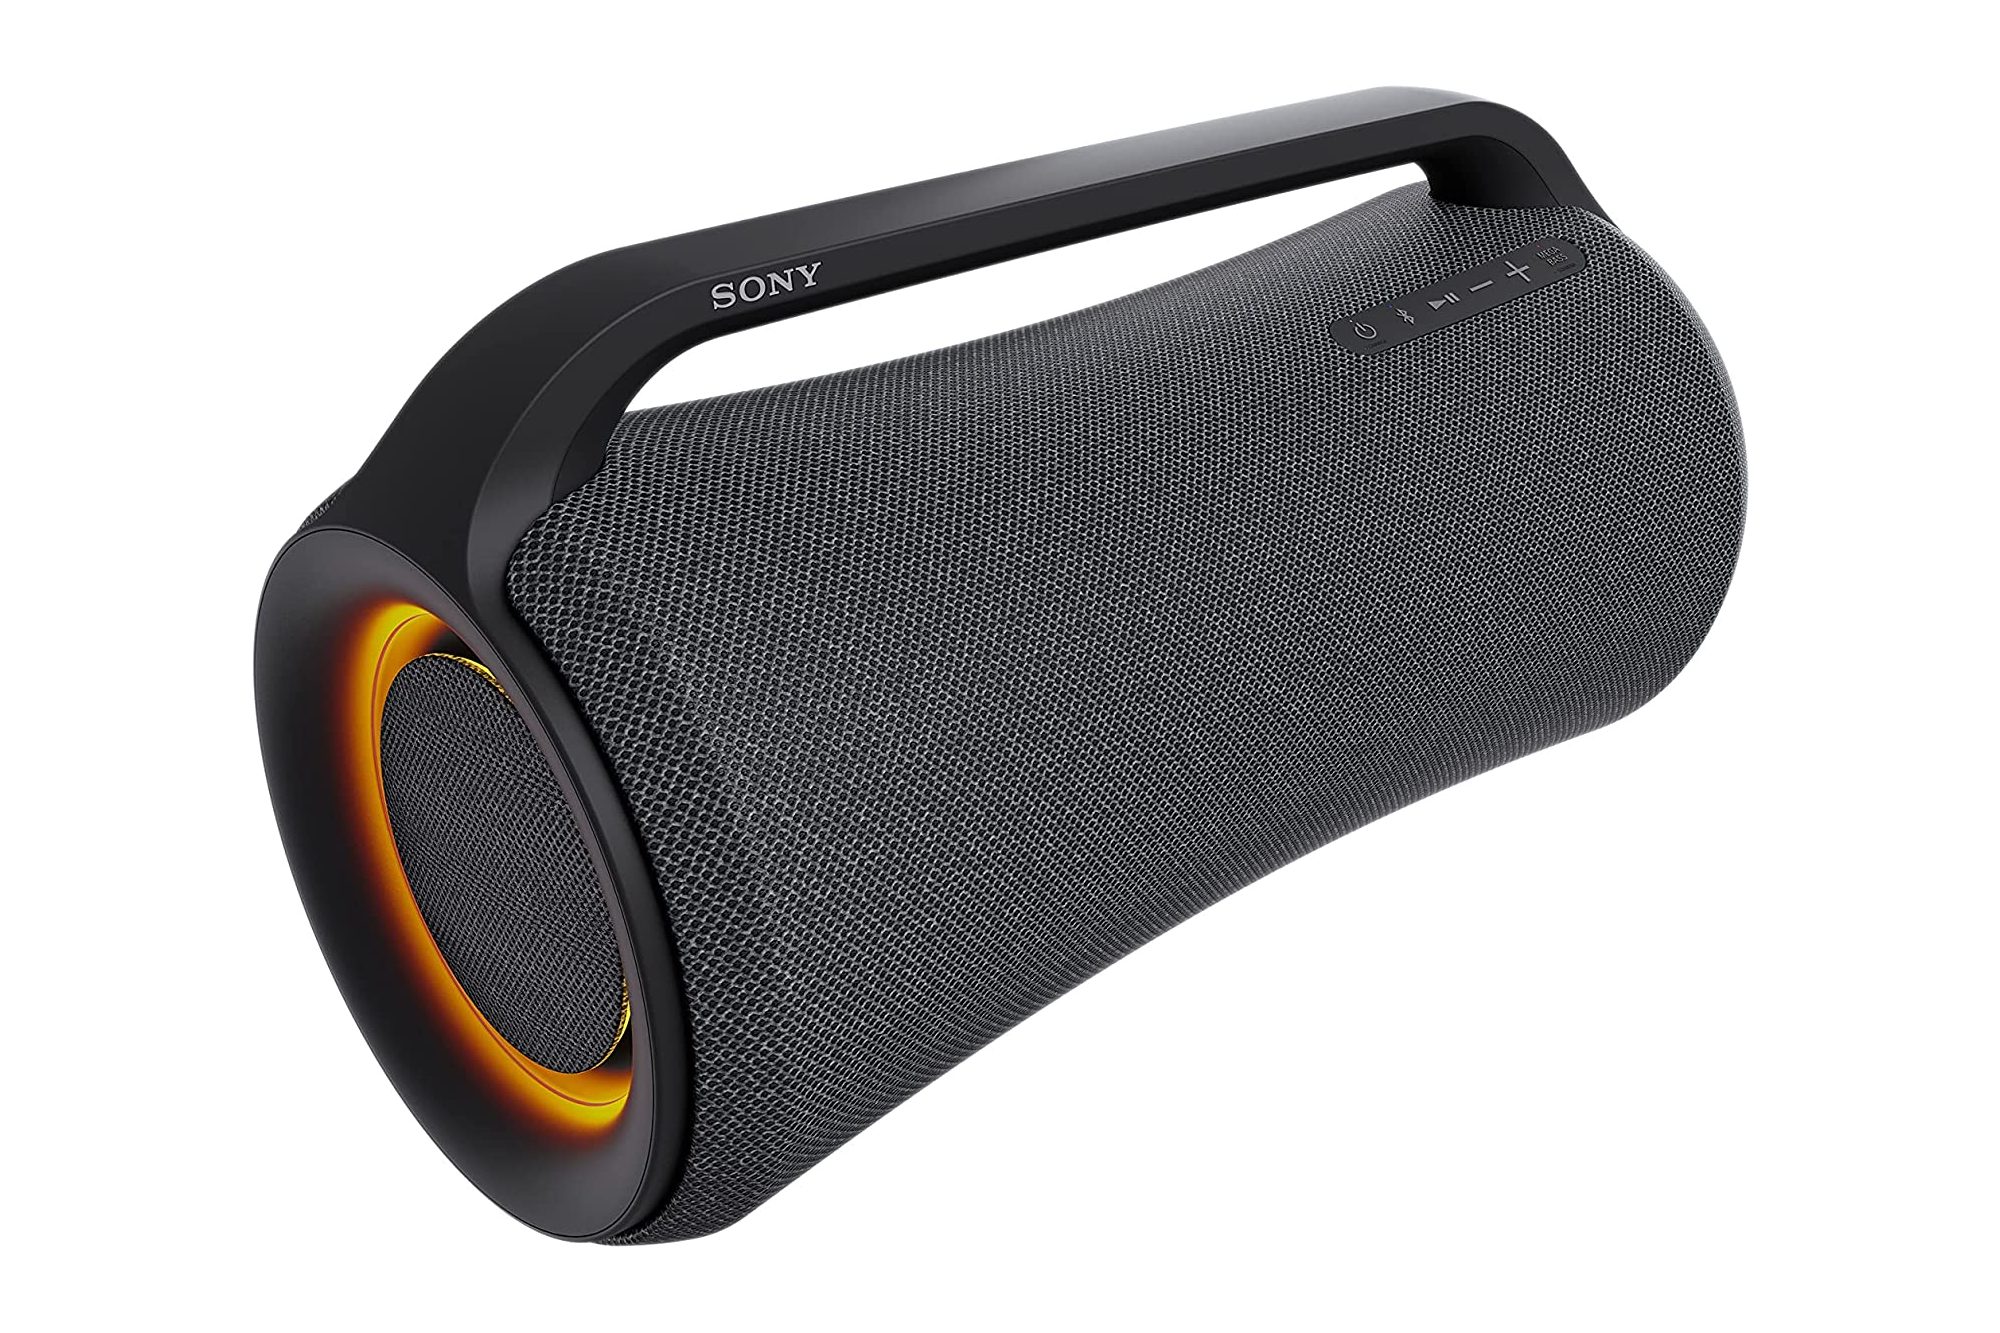 Sony SRS-XG500 Bluetooth Party speaker